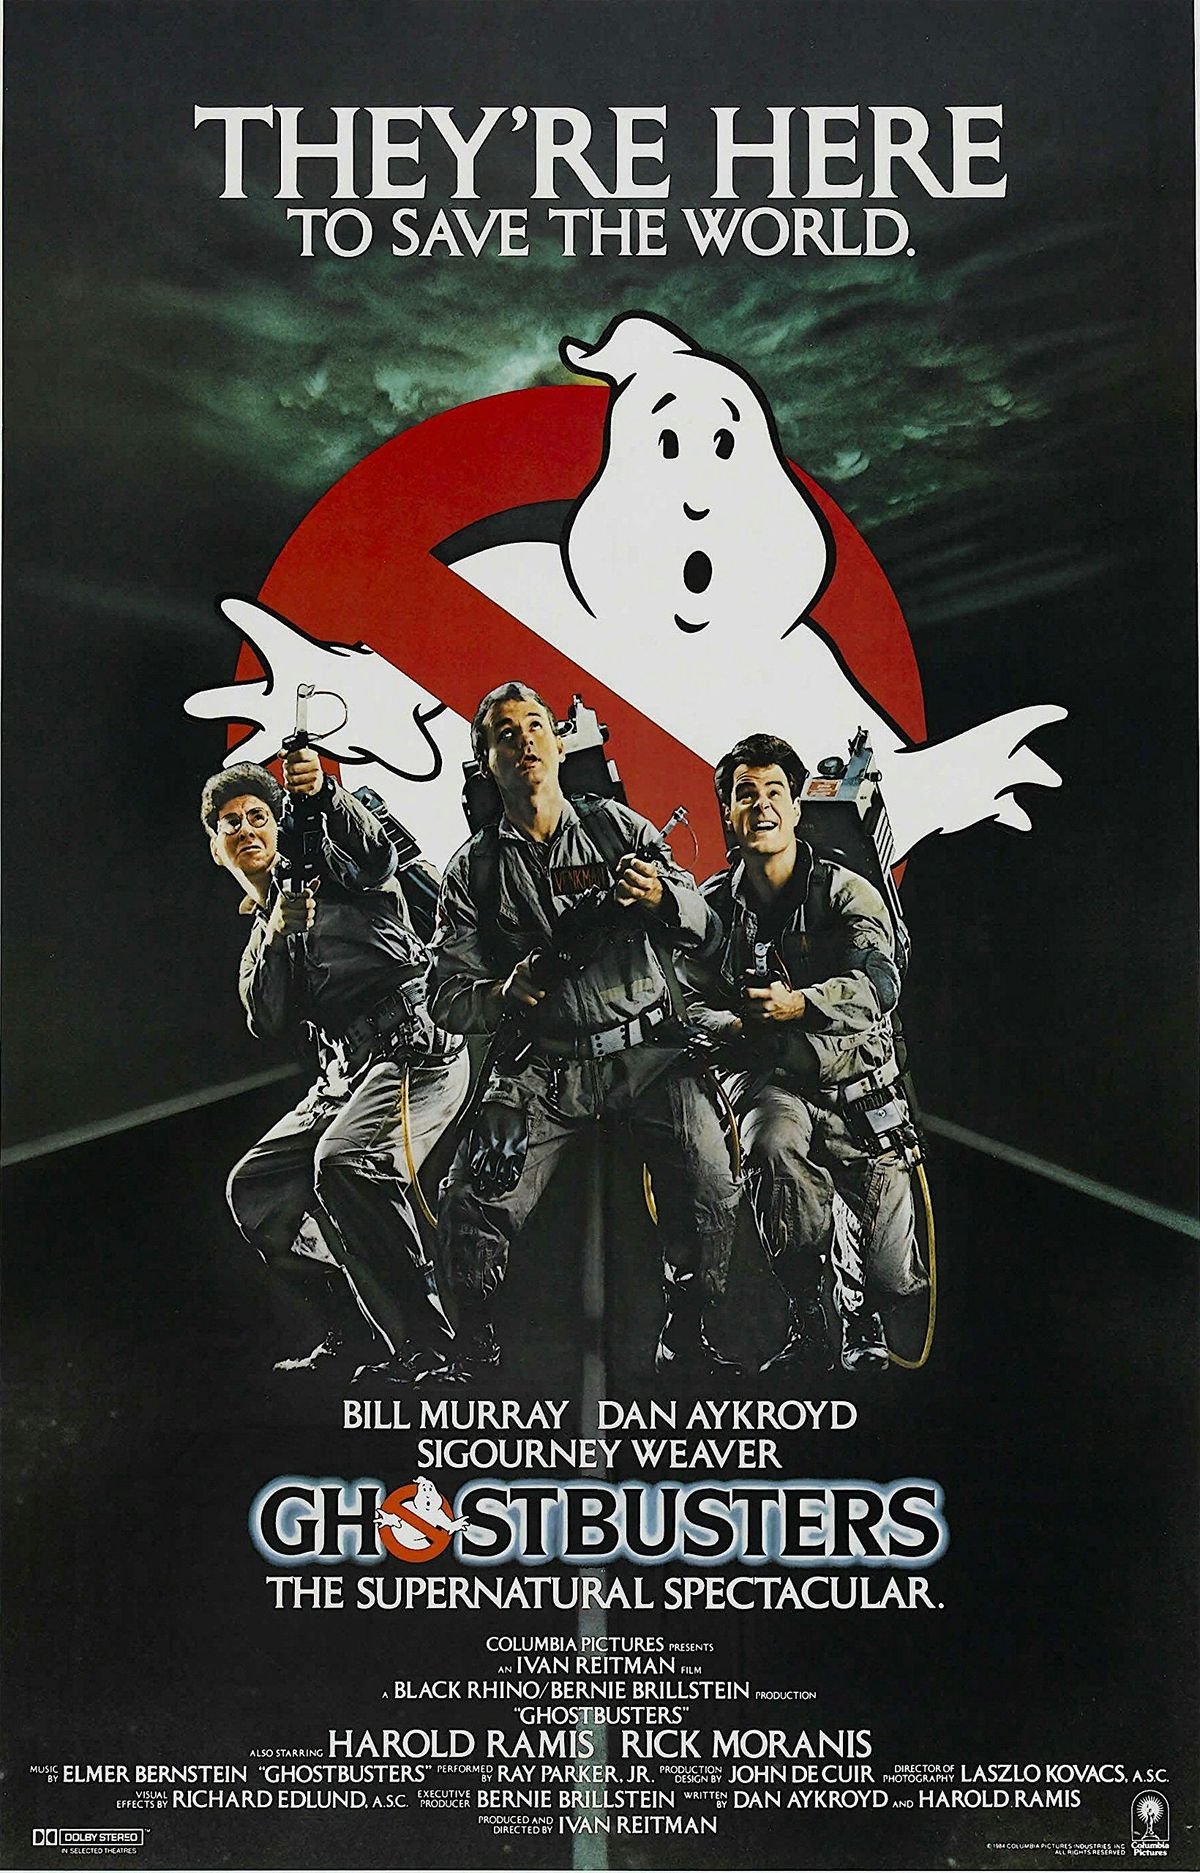 Movie Screening: 40th Anniversary "Ghostbusters"